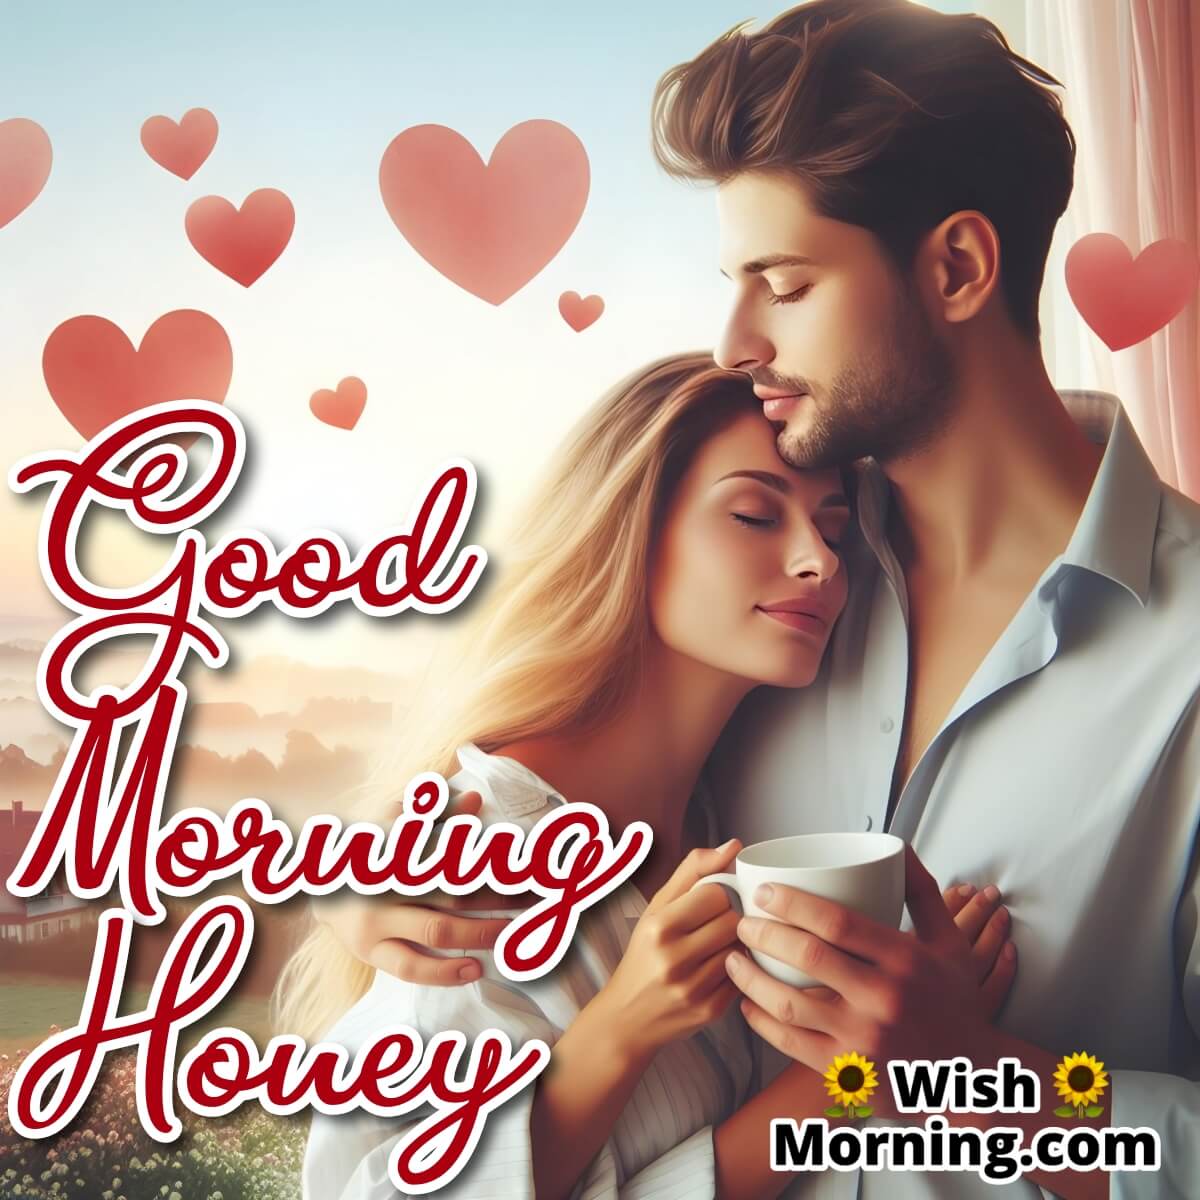 Good Morning Honey